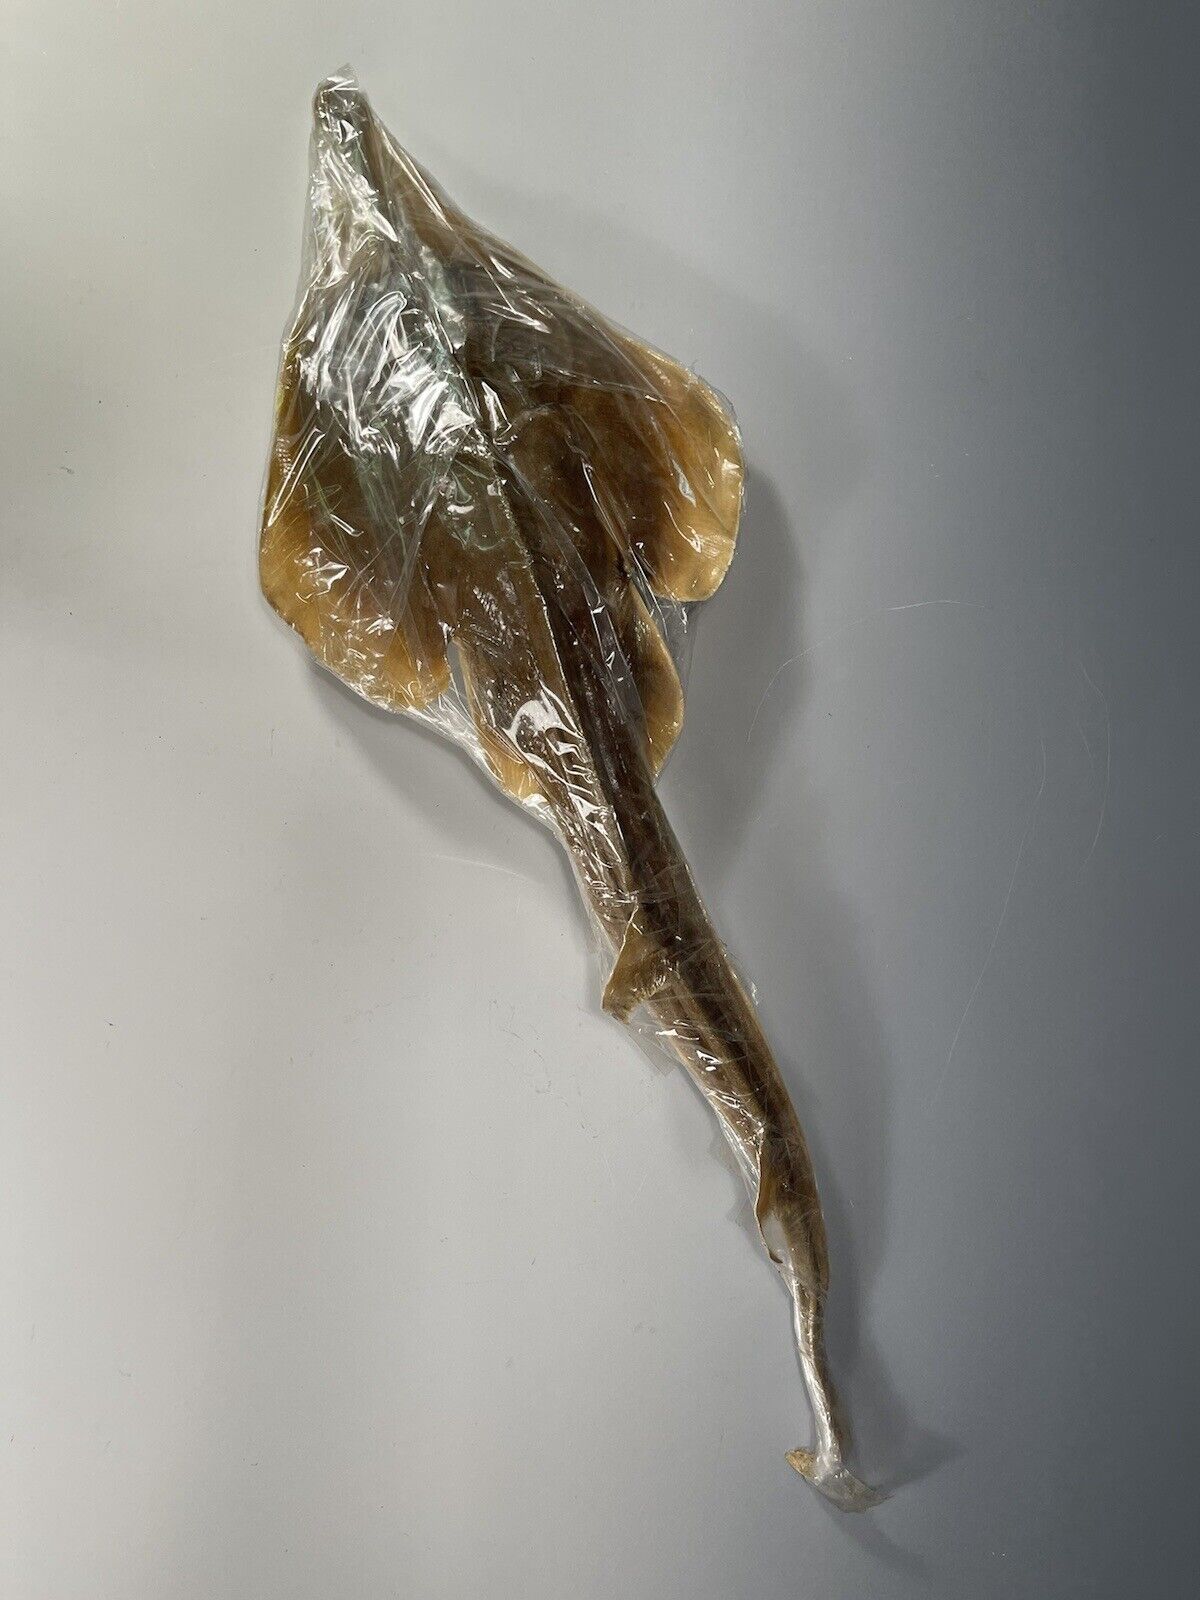 Very Rare whole Guitarfish Taxidermy specimen